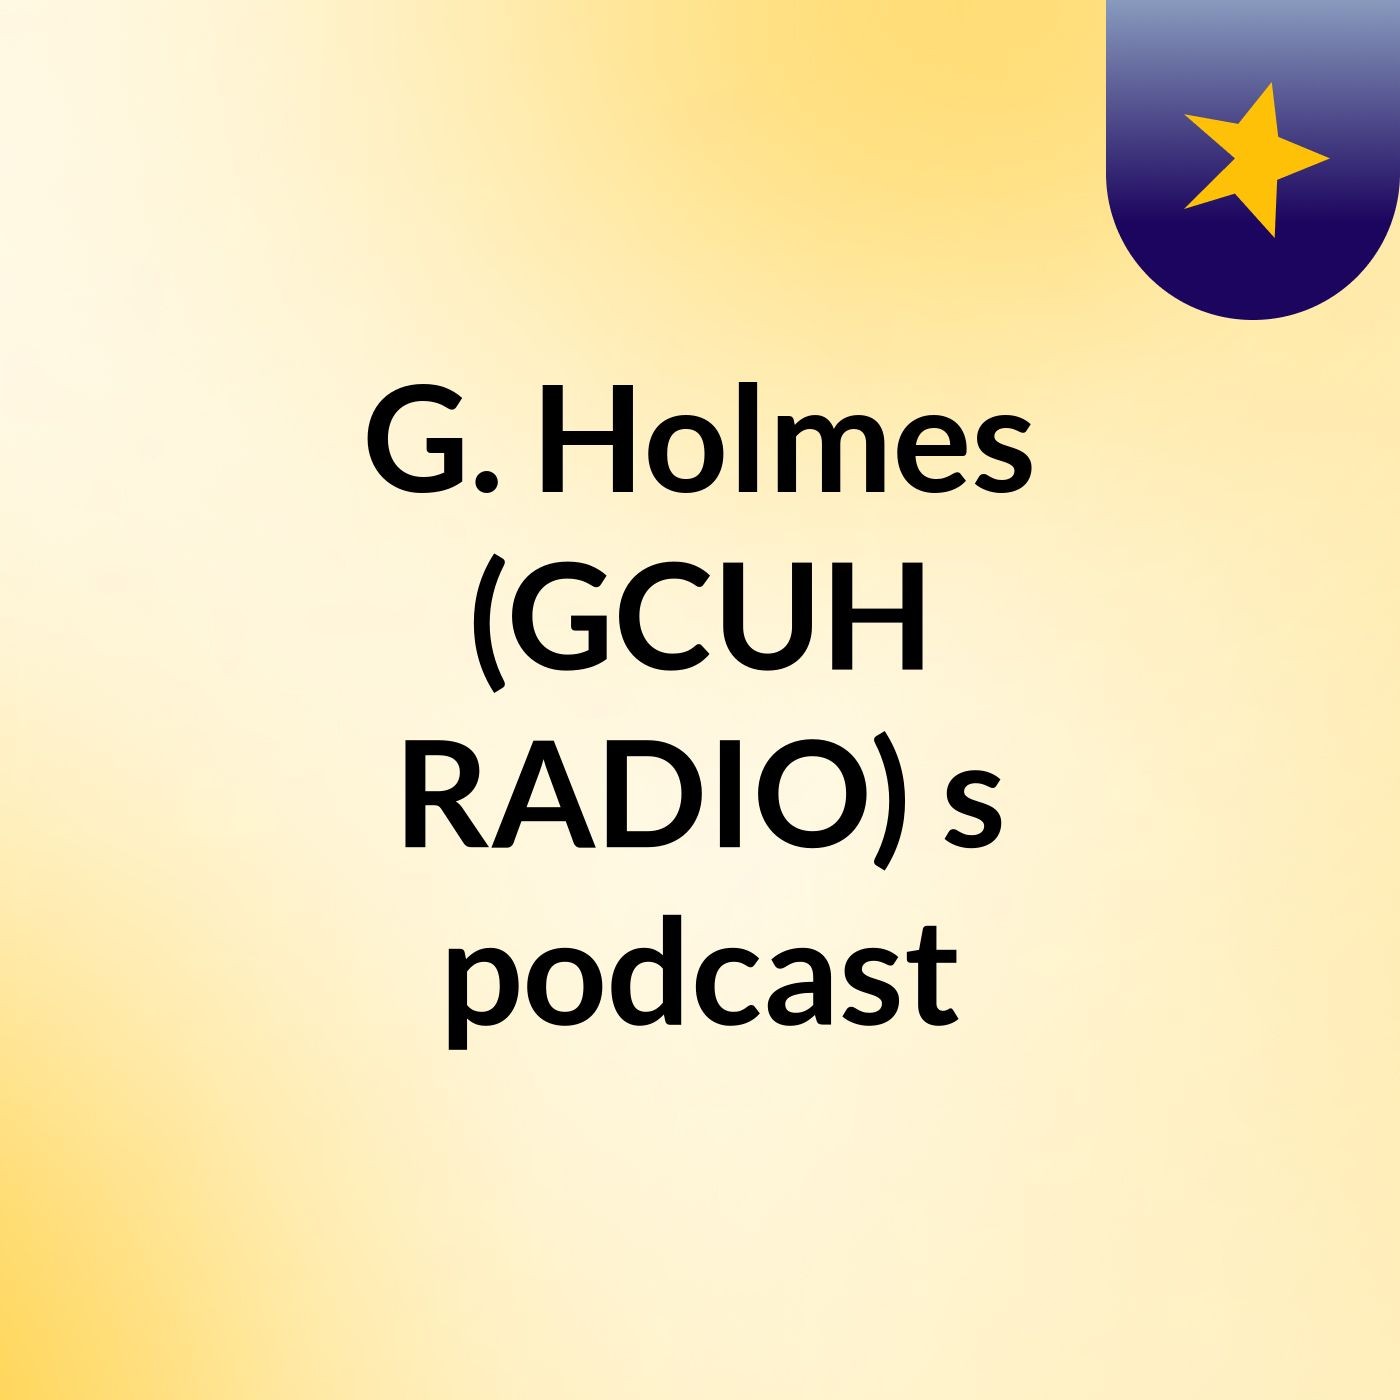 G. Holmes (GCUH RADIO)'s podcast